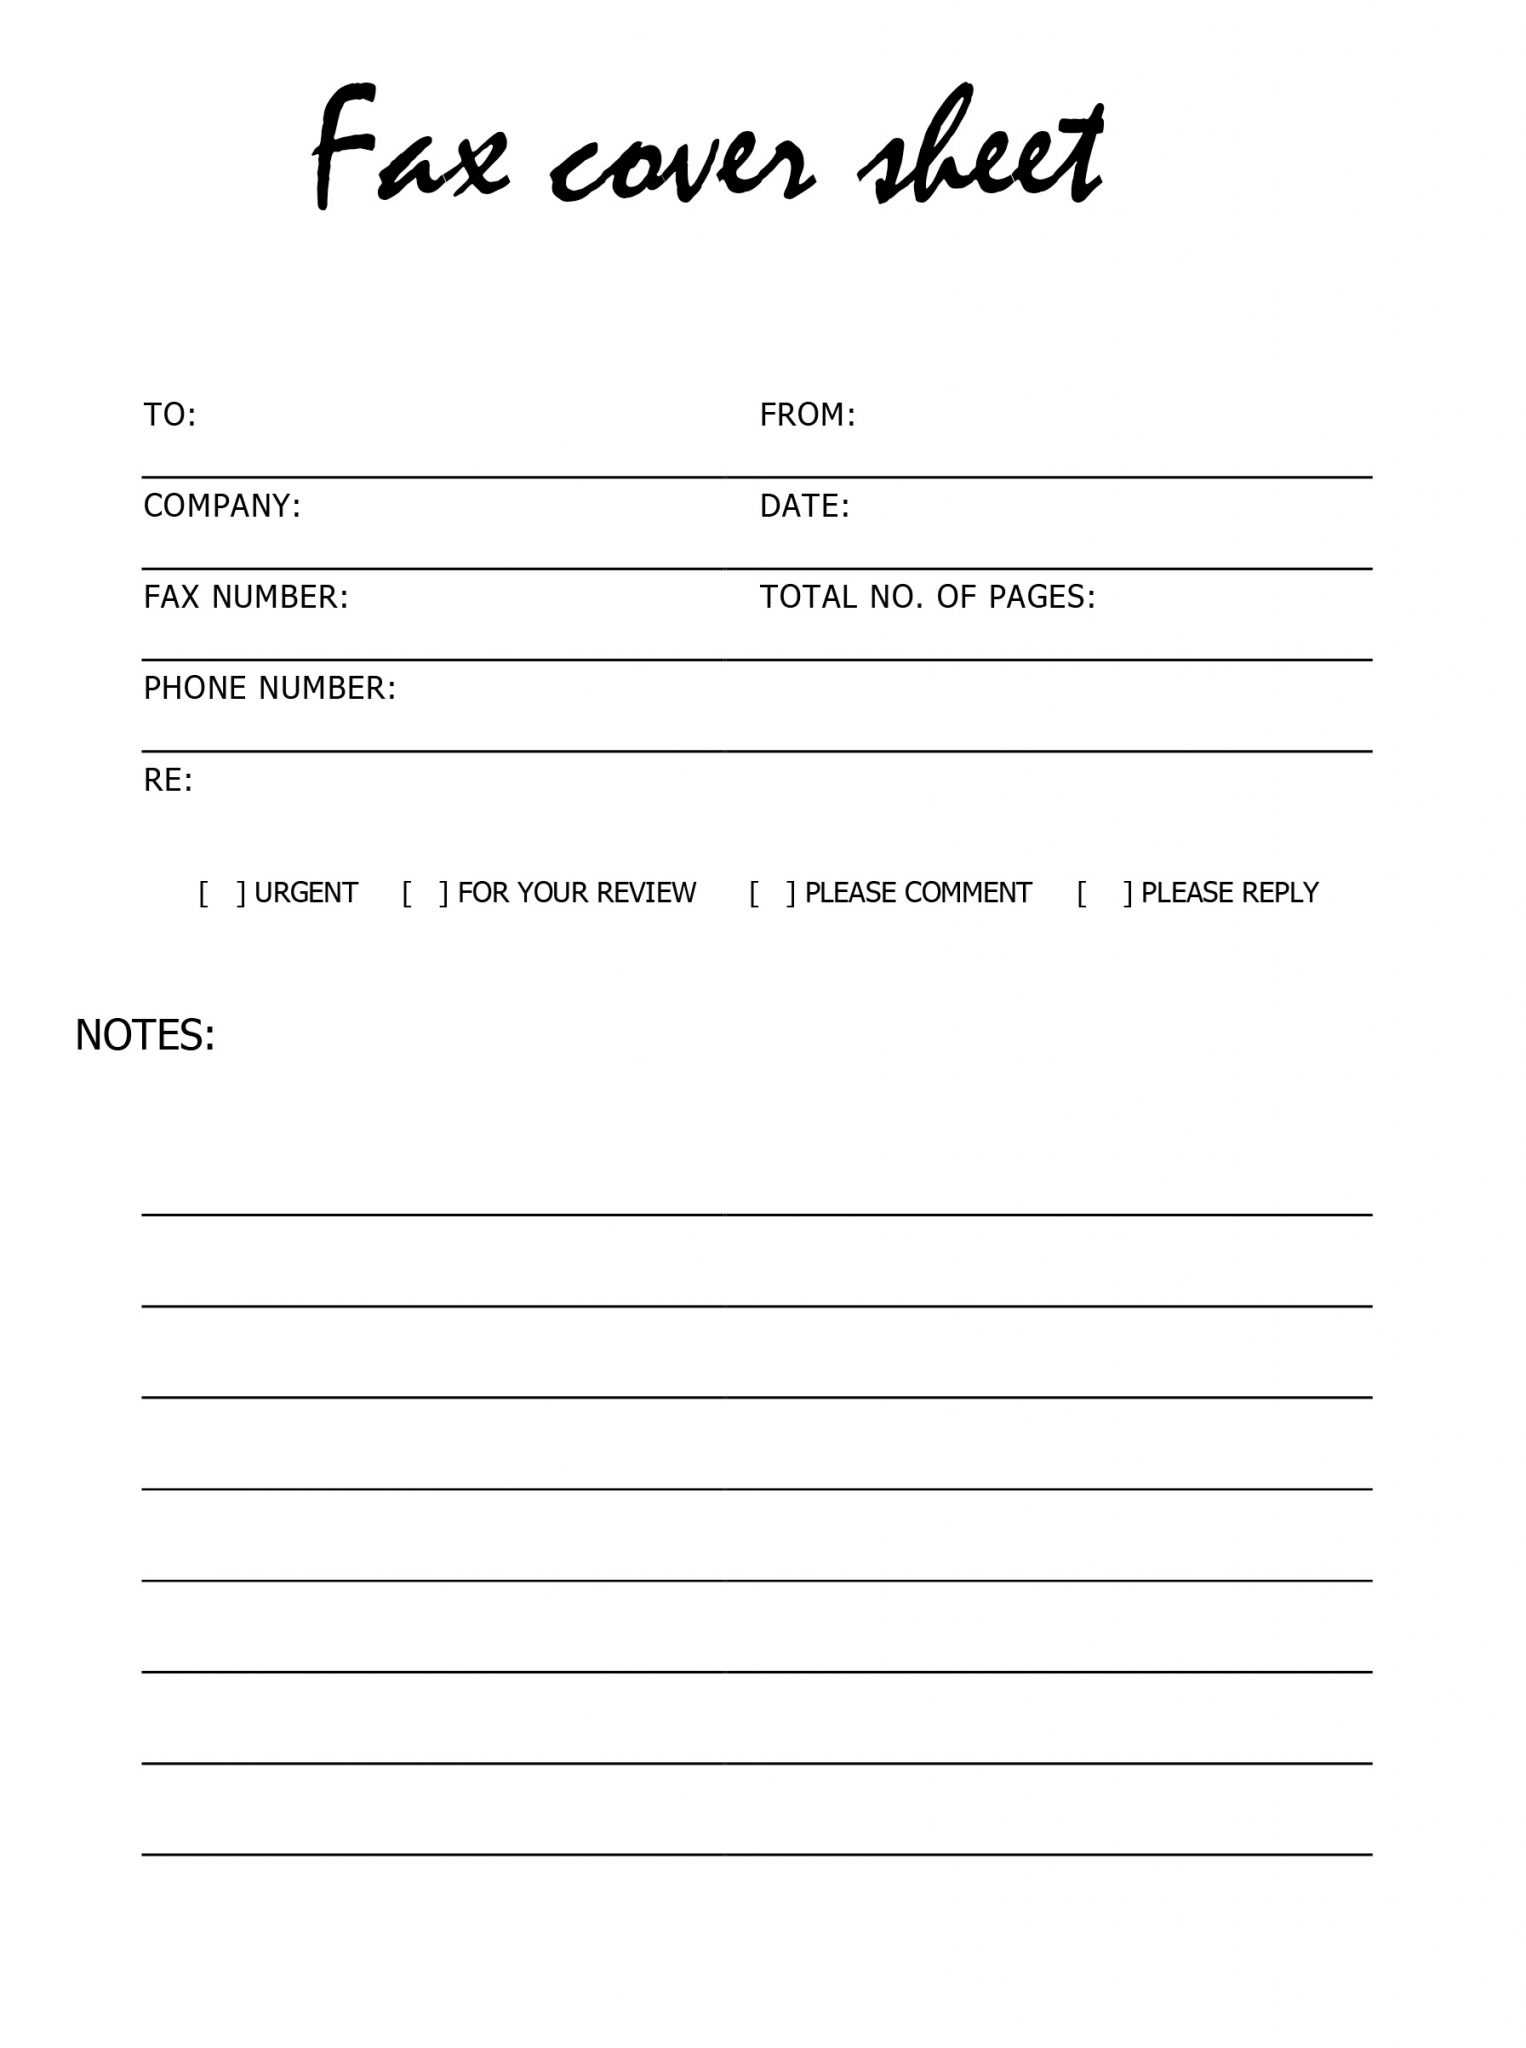 printable-free-fax-cover-sheet-pdf-free-templates-printable